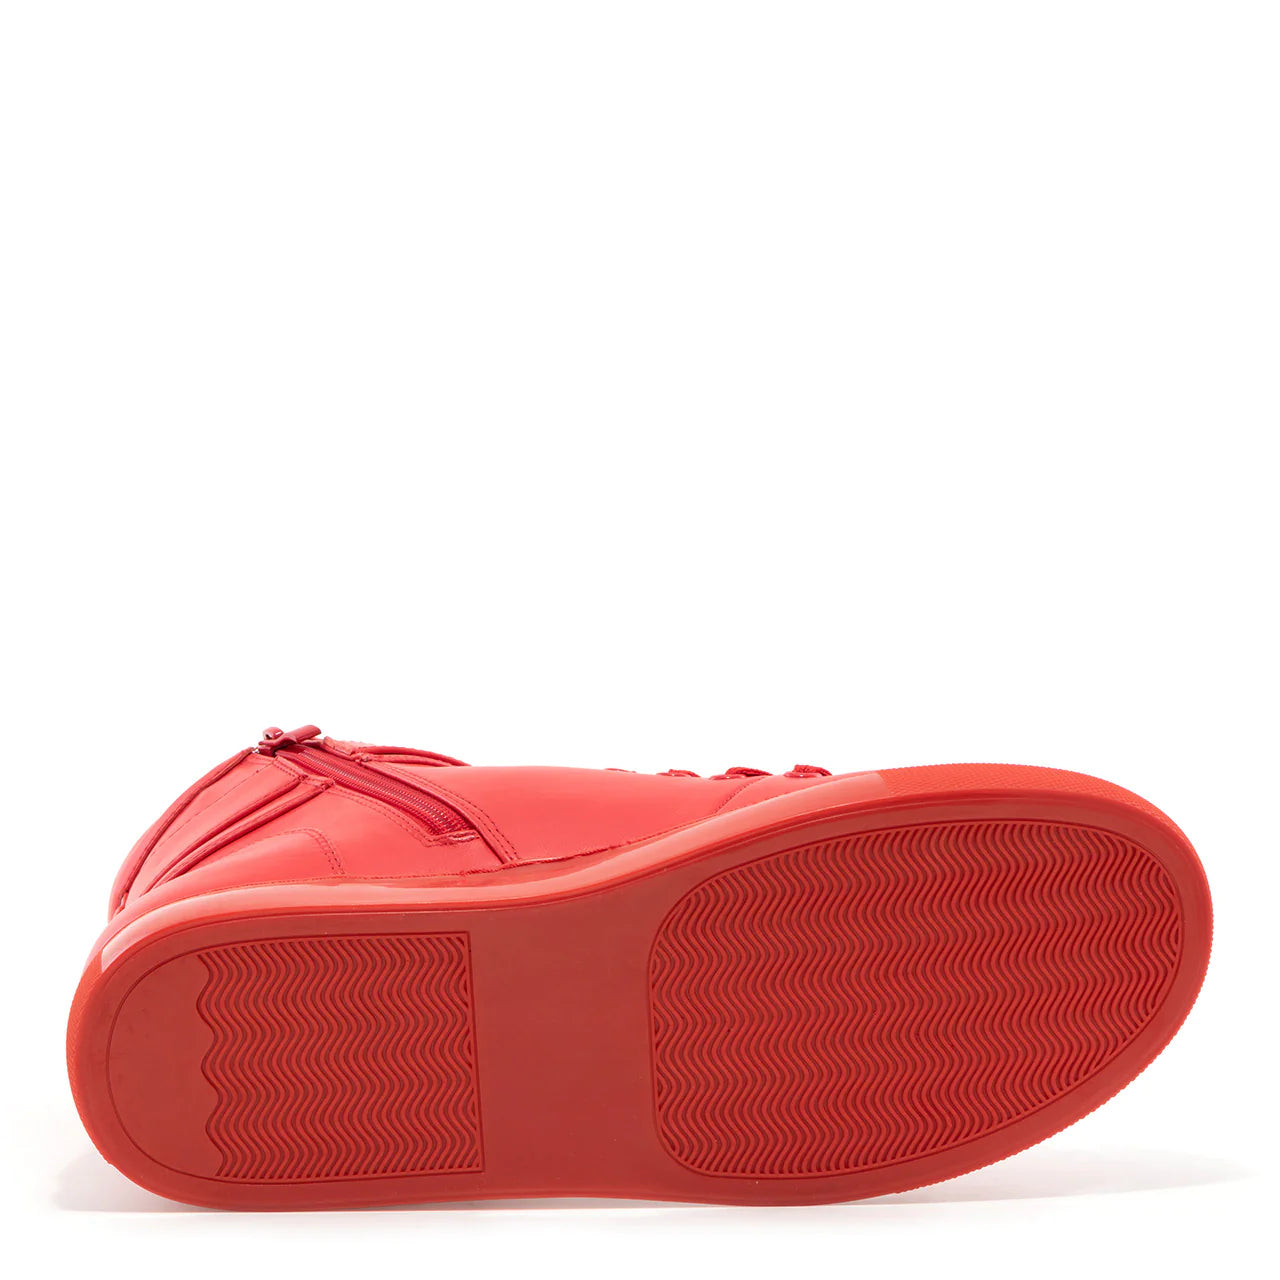 Mens's Footwear - Sullivan 2,  Red